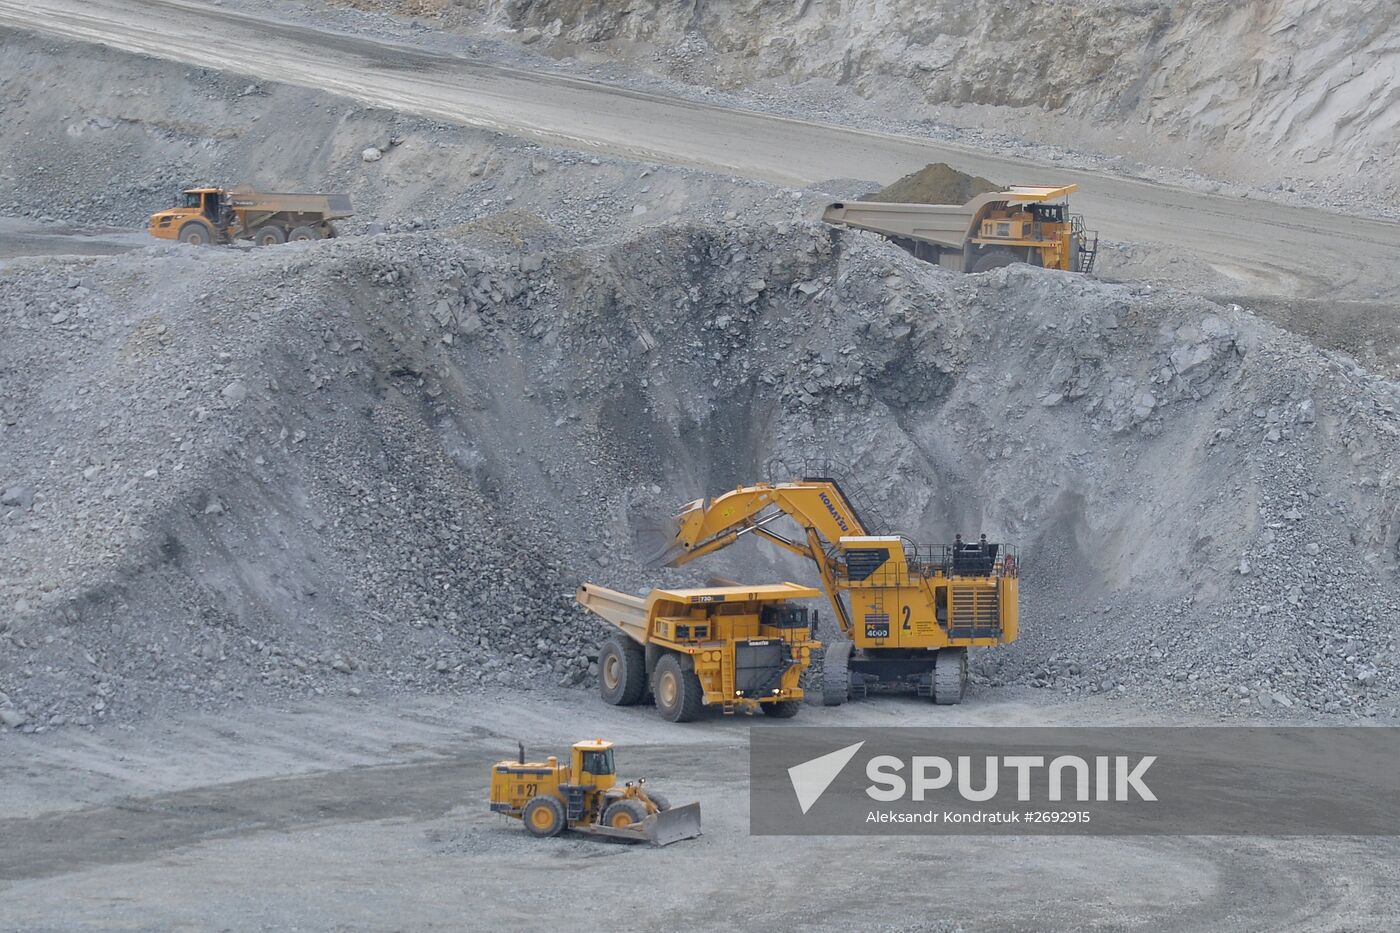 The Mikheyevskoe porphyry copper deposit in the Chelyabinsk region